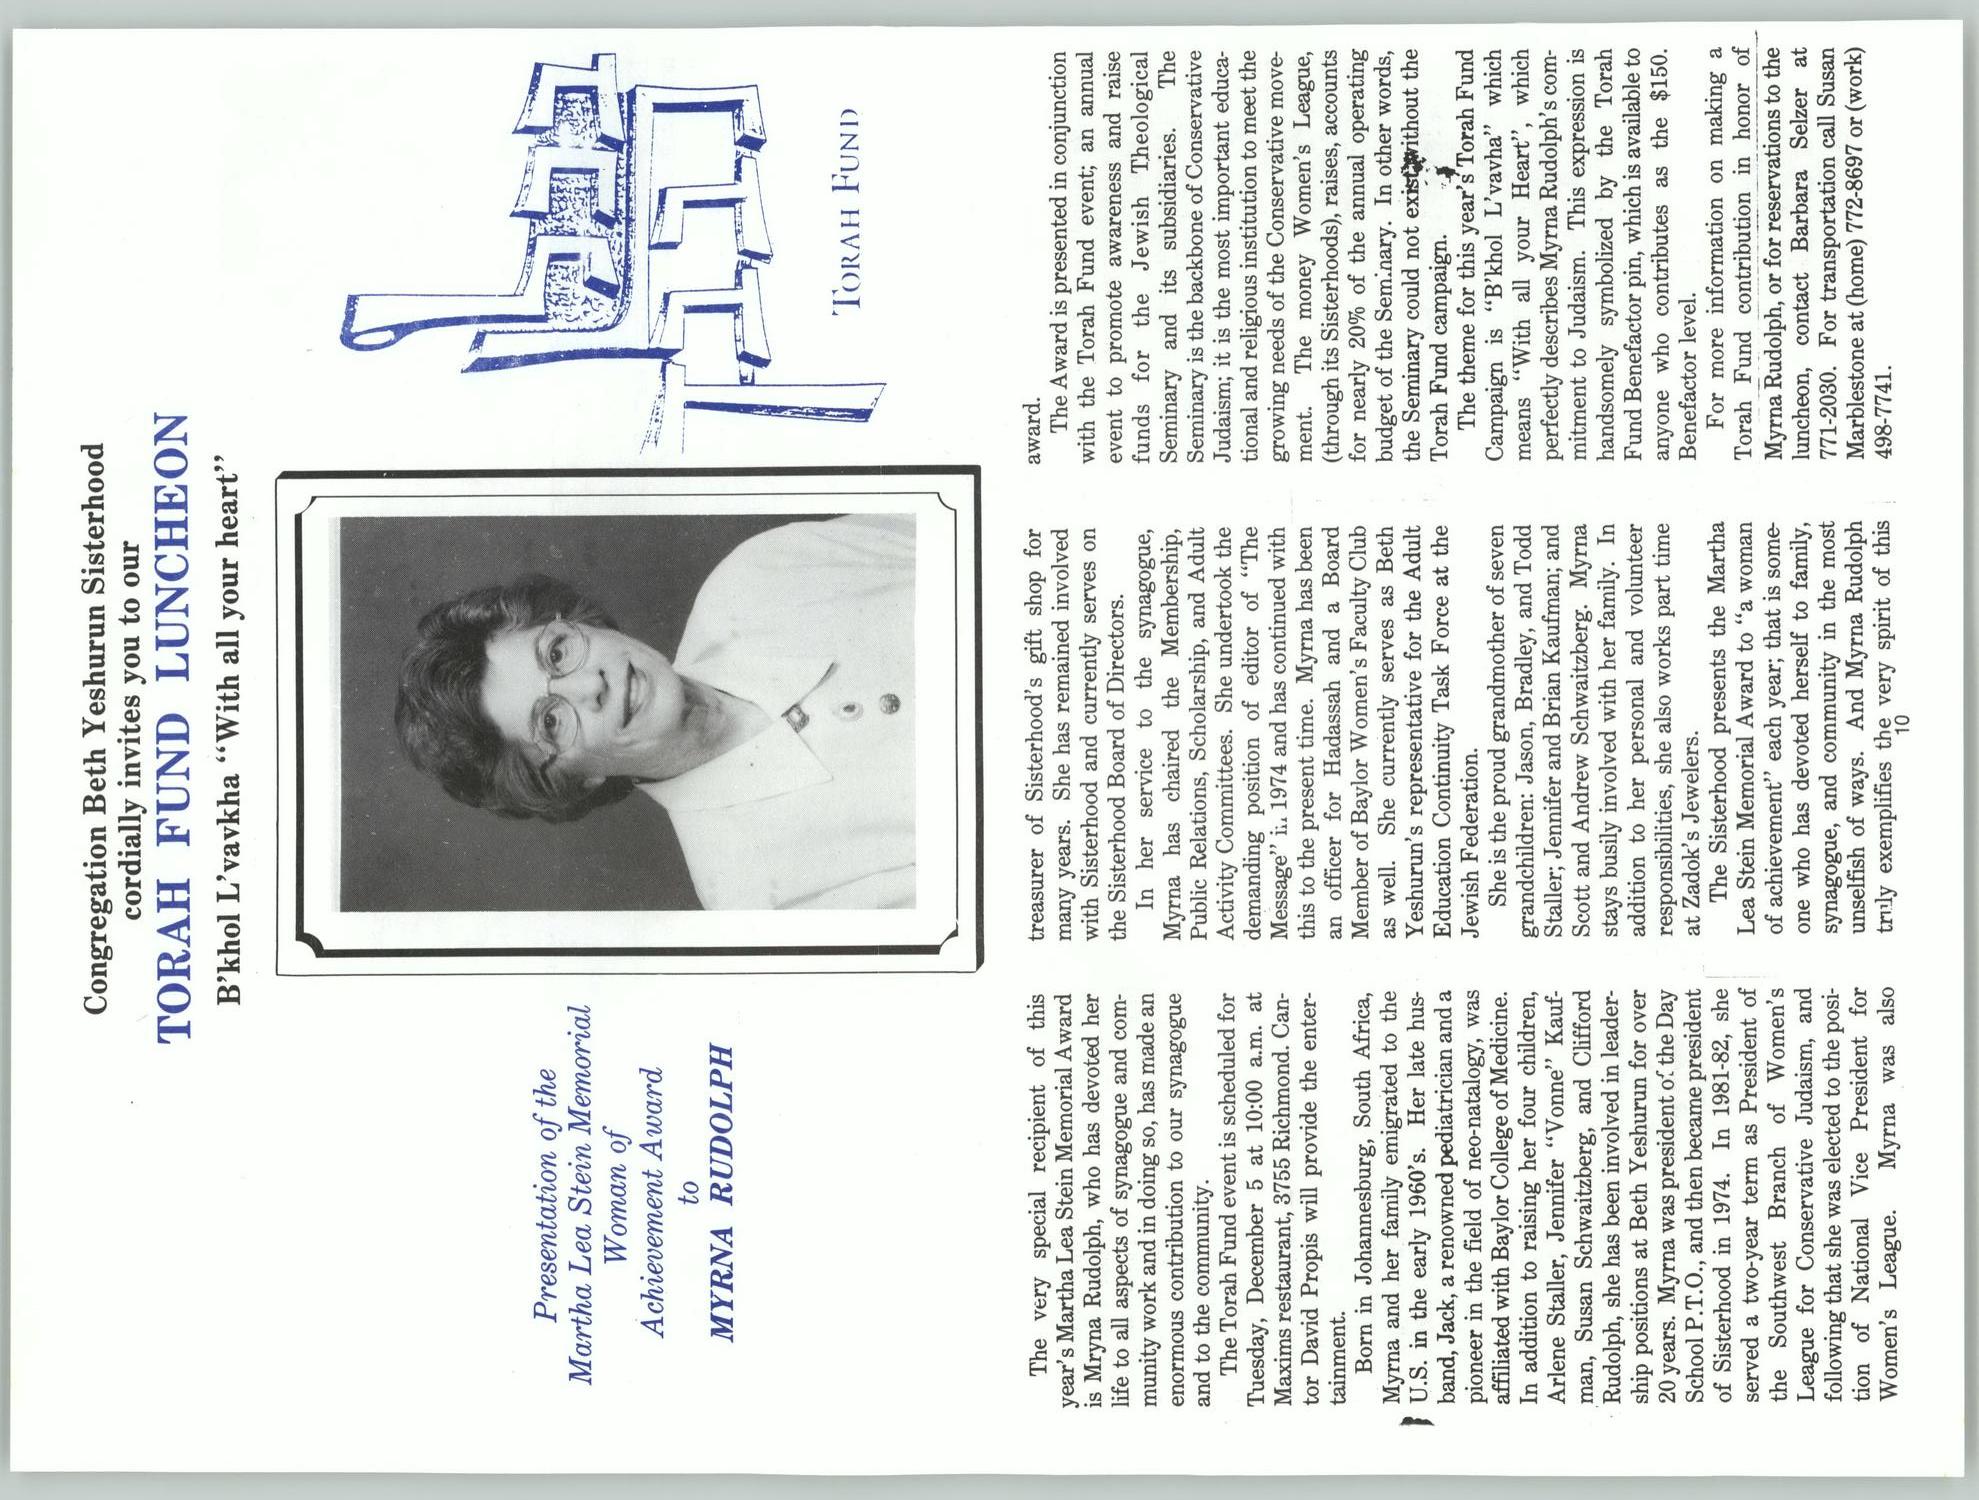 The Message, Volume 23, Number 5, November 1995
                                                
                                                    10
                                                